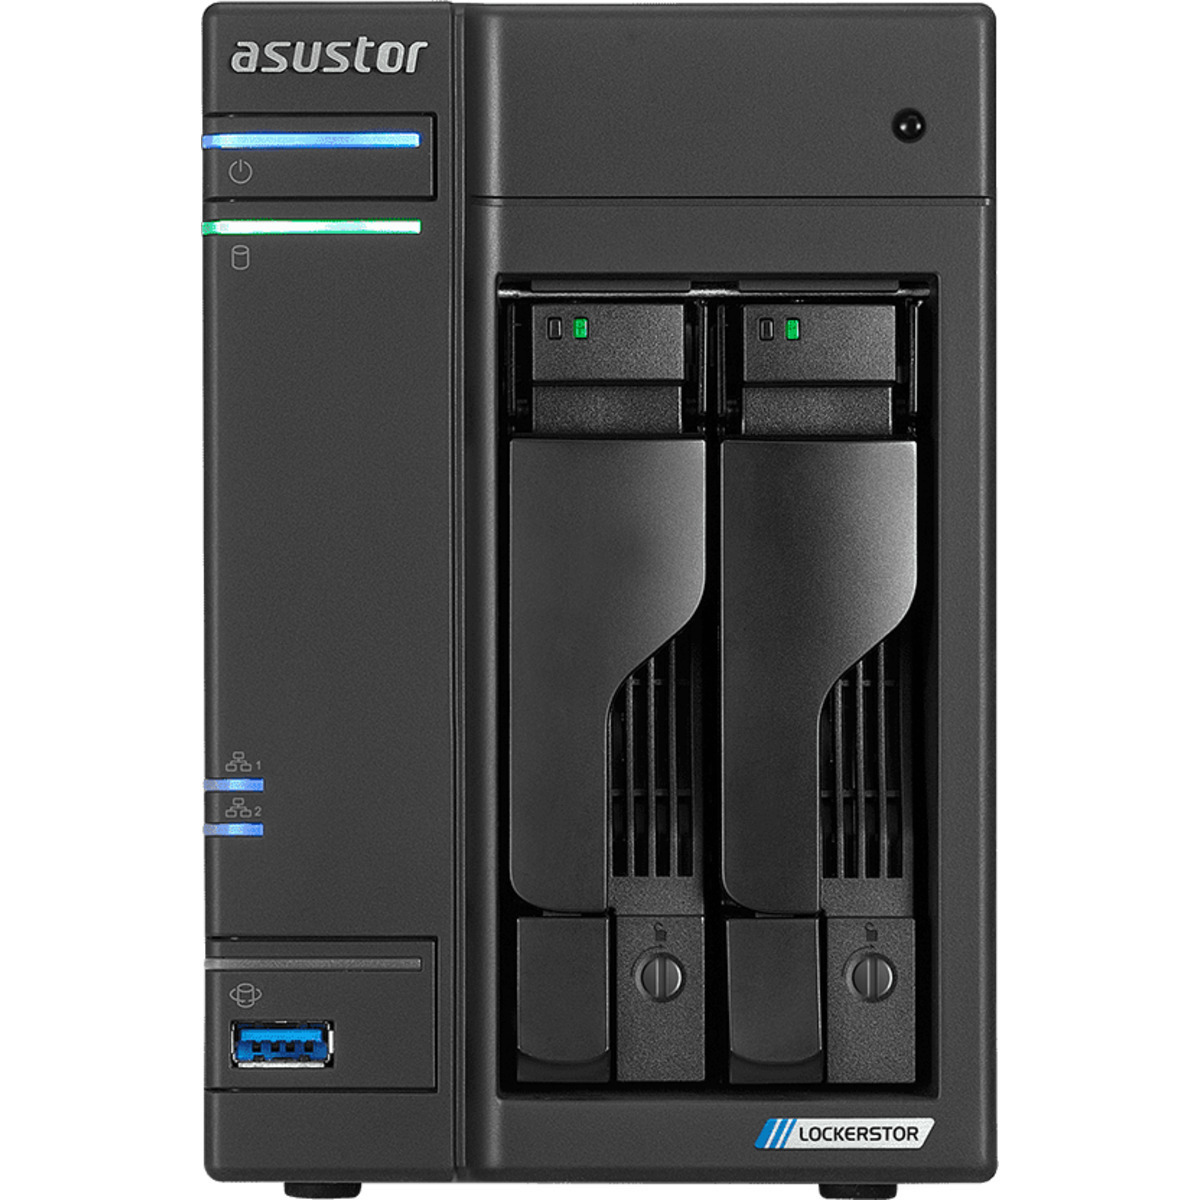 ASUSTOR AS6602T Lockerstor 2 8tb 2-Bay Desktop Multimedia / Power User / Business NAS - Network Attached Storage Device 2x4tb Western Digital Gold WD4004FRYZ 3.5 7200rpm SATA 6Gb/s HDD ENTERPRISE Class Drives Installed - Burn-In Tested - FREE RAM UPGRADE AS6602T Lockerstor 2